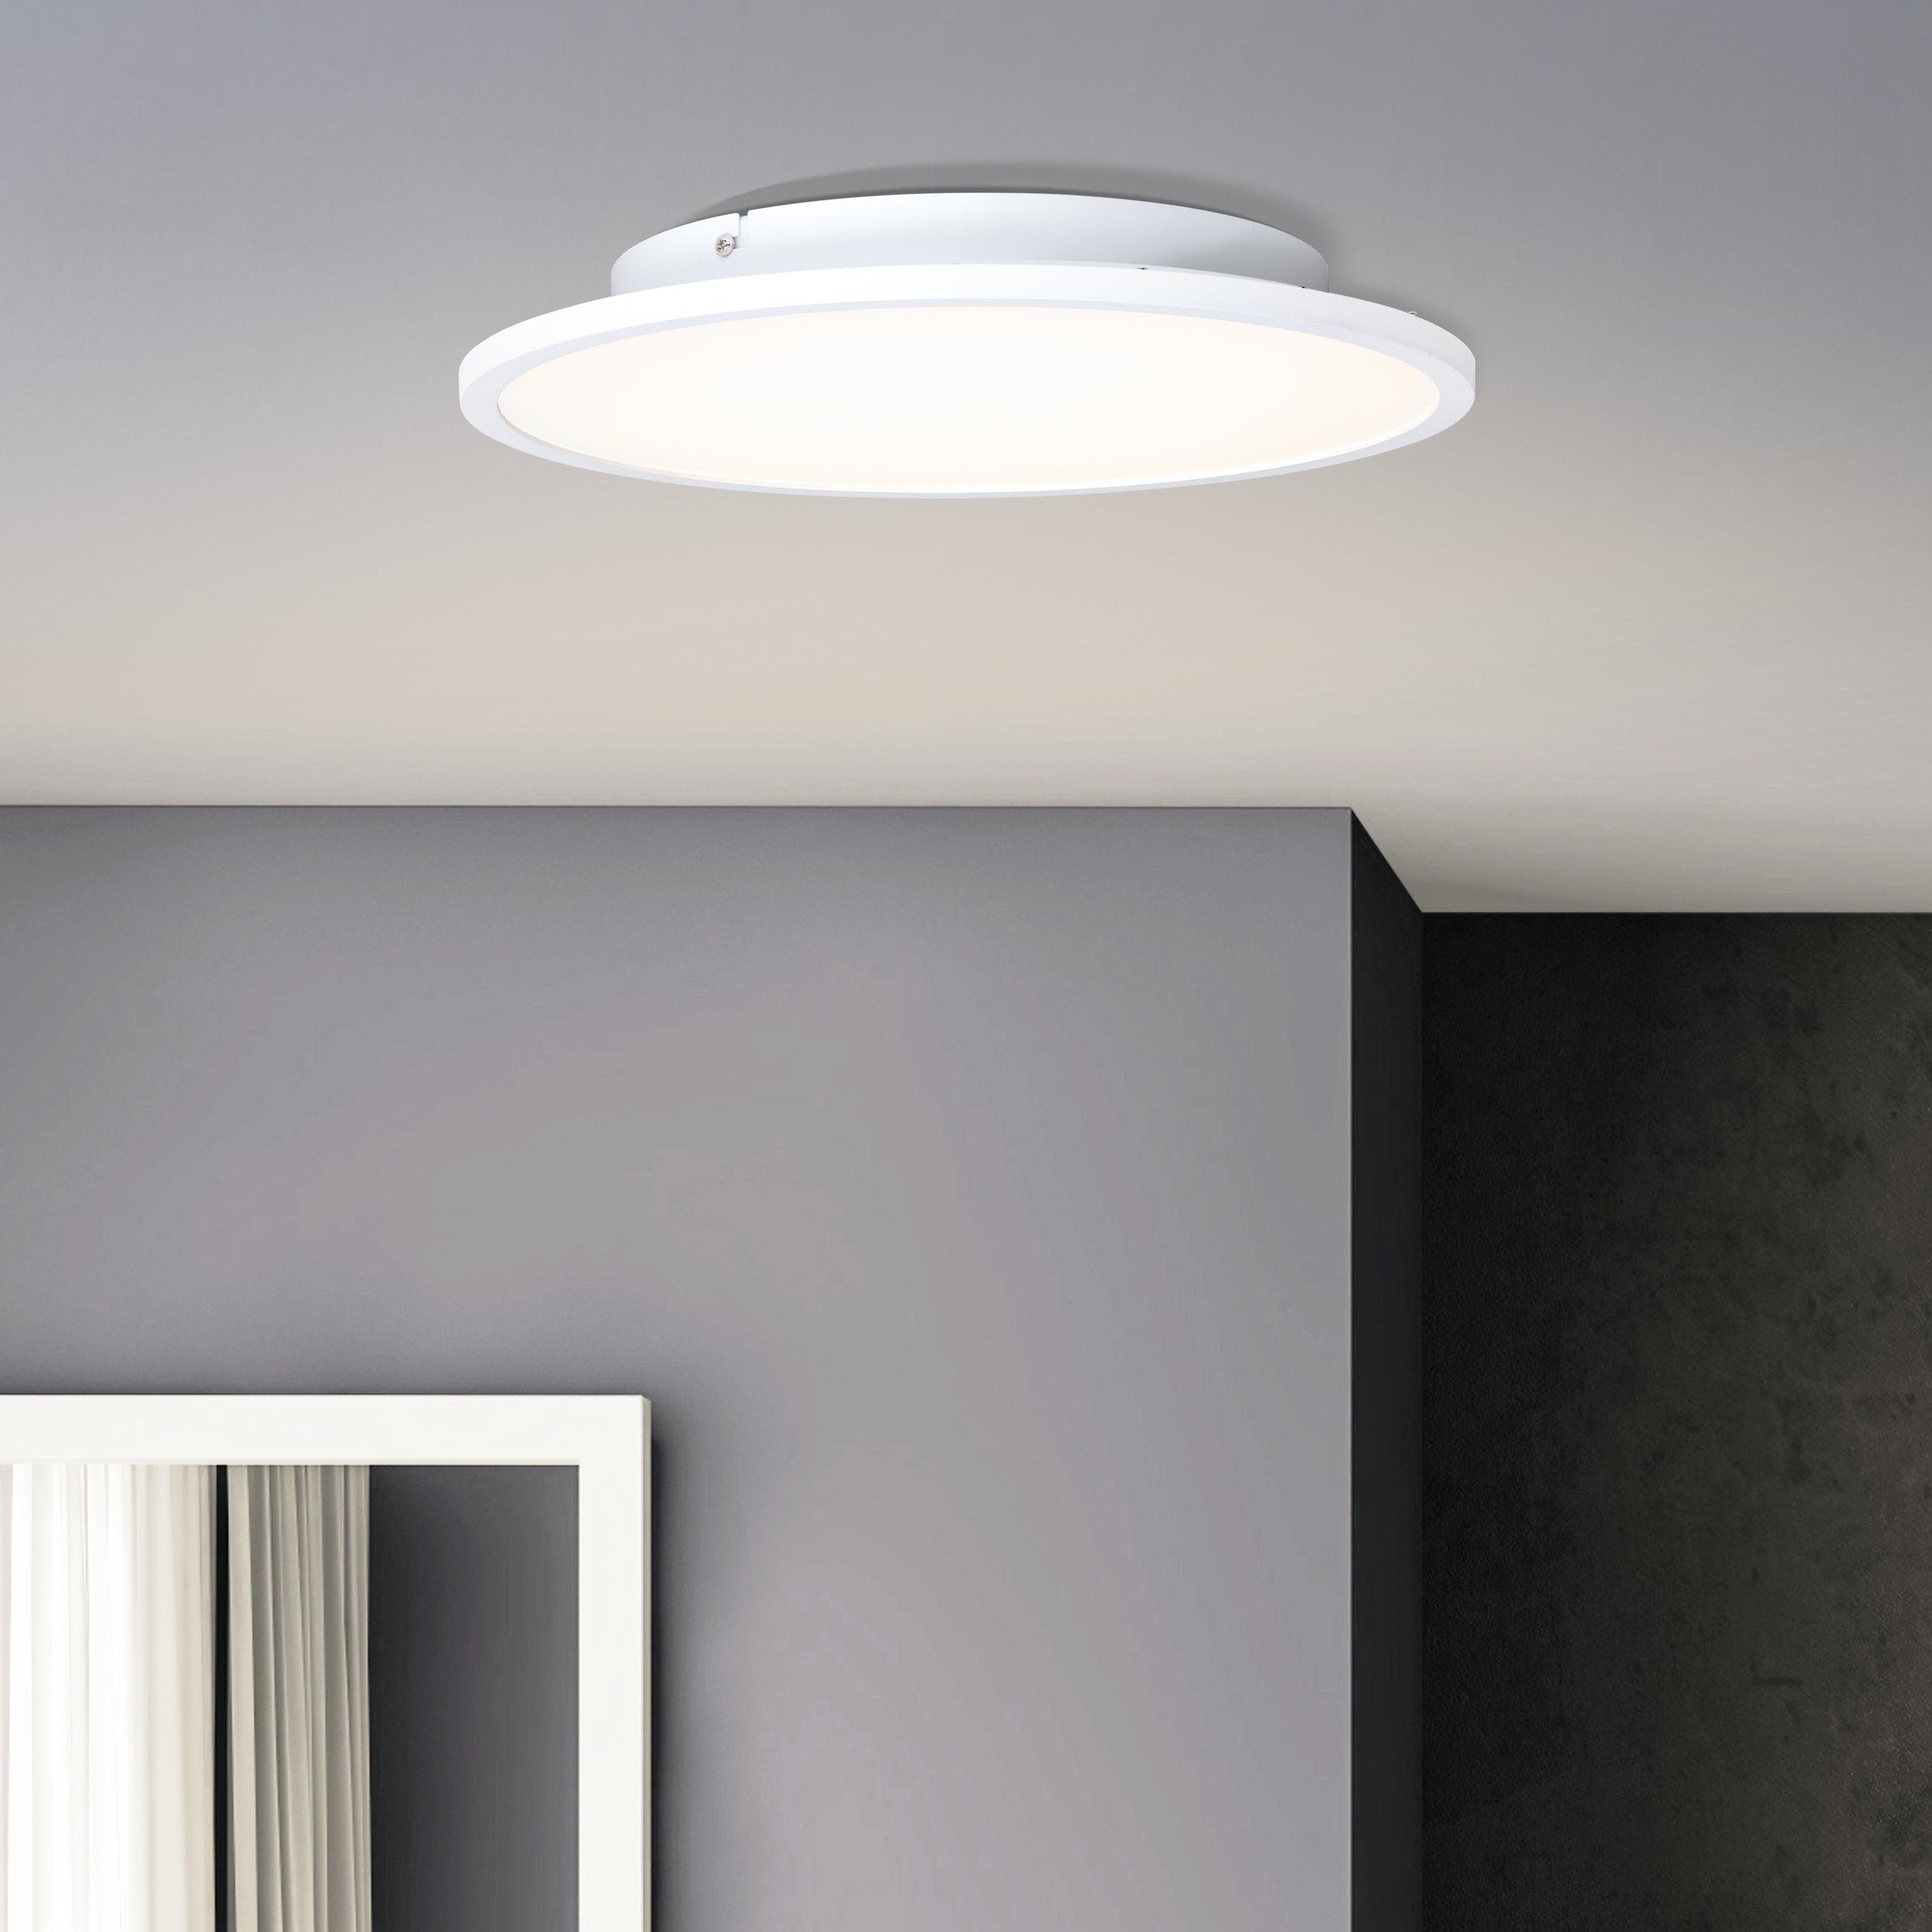 Lightbox LED Deckenleuchte, LED fest integriert, warmweiß, LED Aufbaupaneel, 35 cm Ø, 24 W, 2400 lm, 2700 K, Metall/Kunststoff